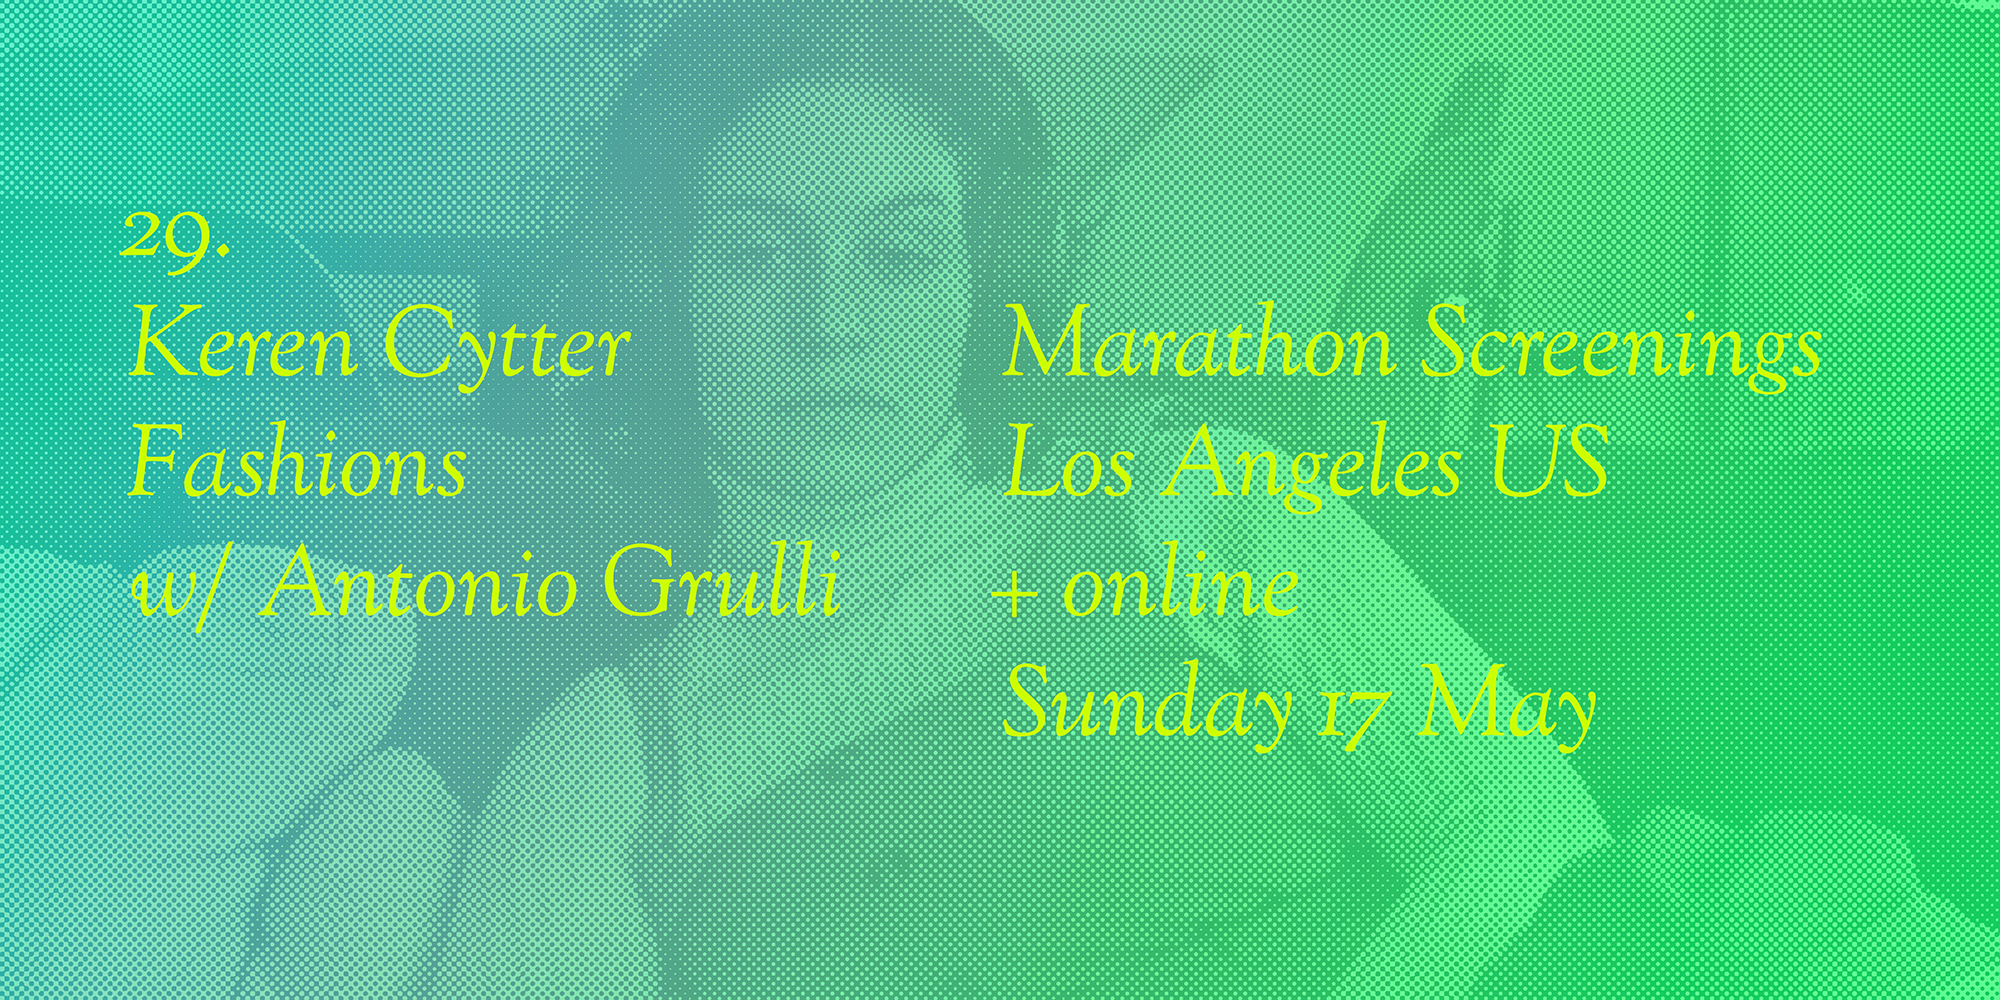 Keren Cytter, Fashions, w/ Antonio Grulli, Syndicate at Marathon Screenings, Los Angeles US and online